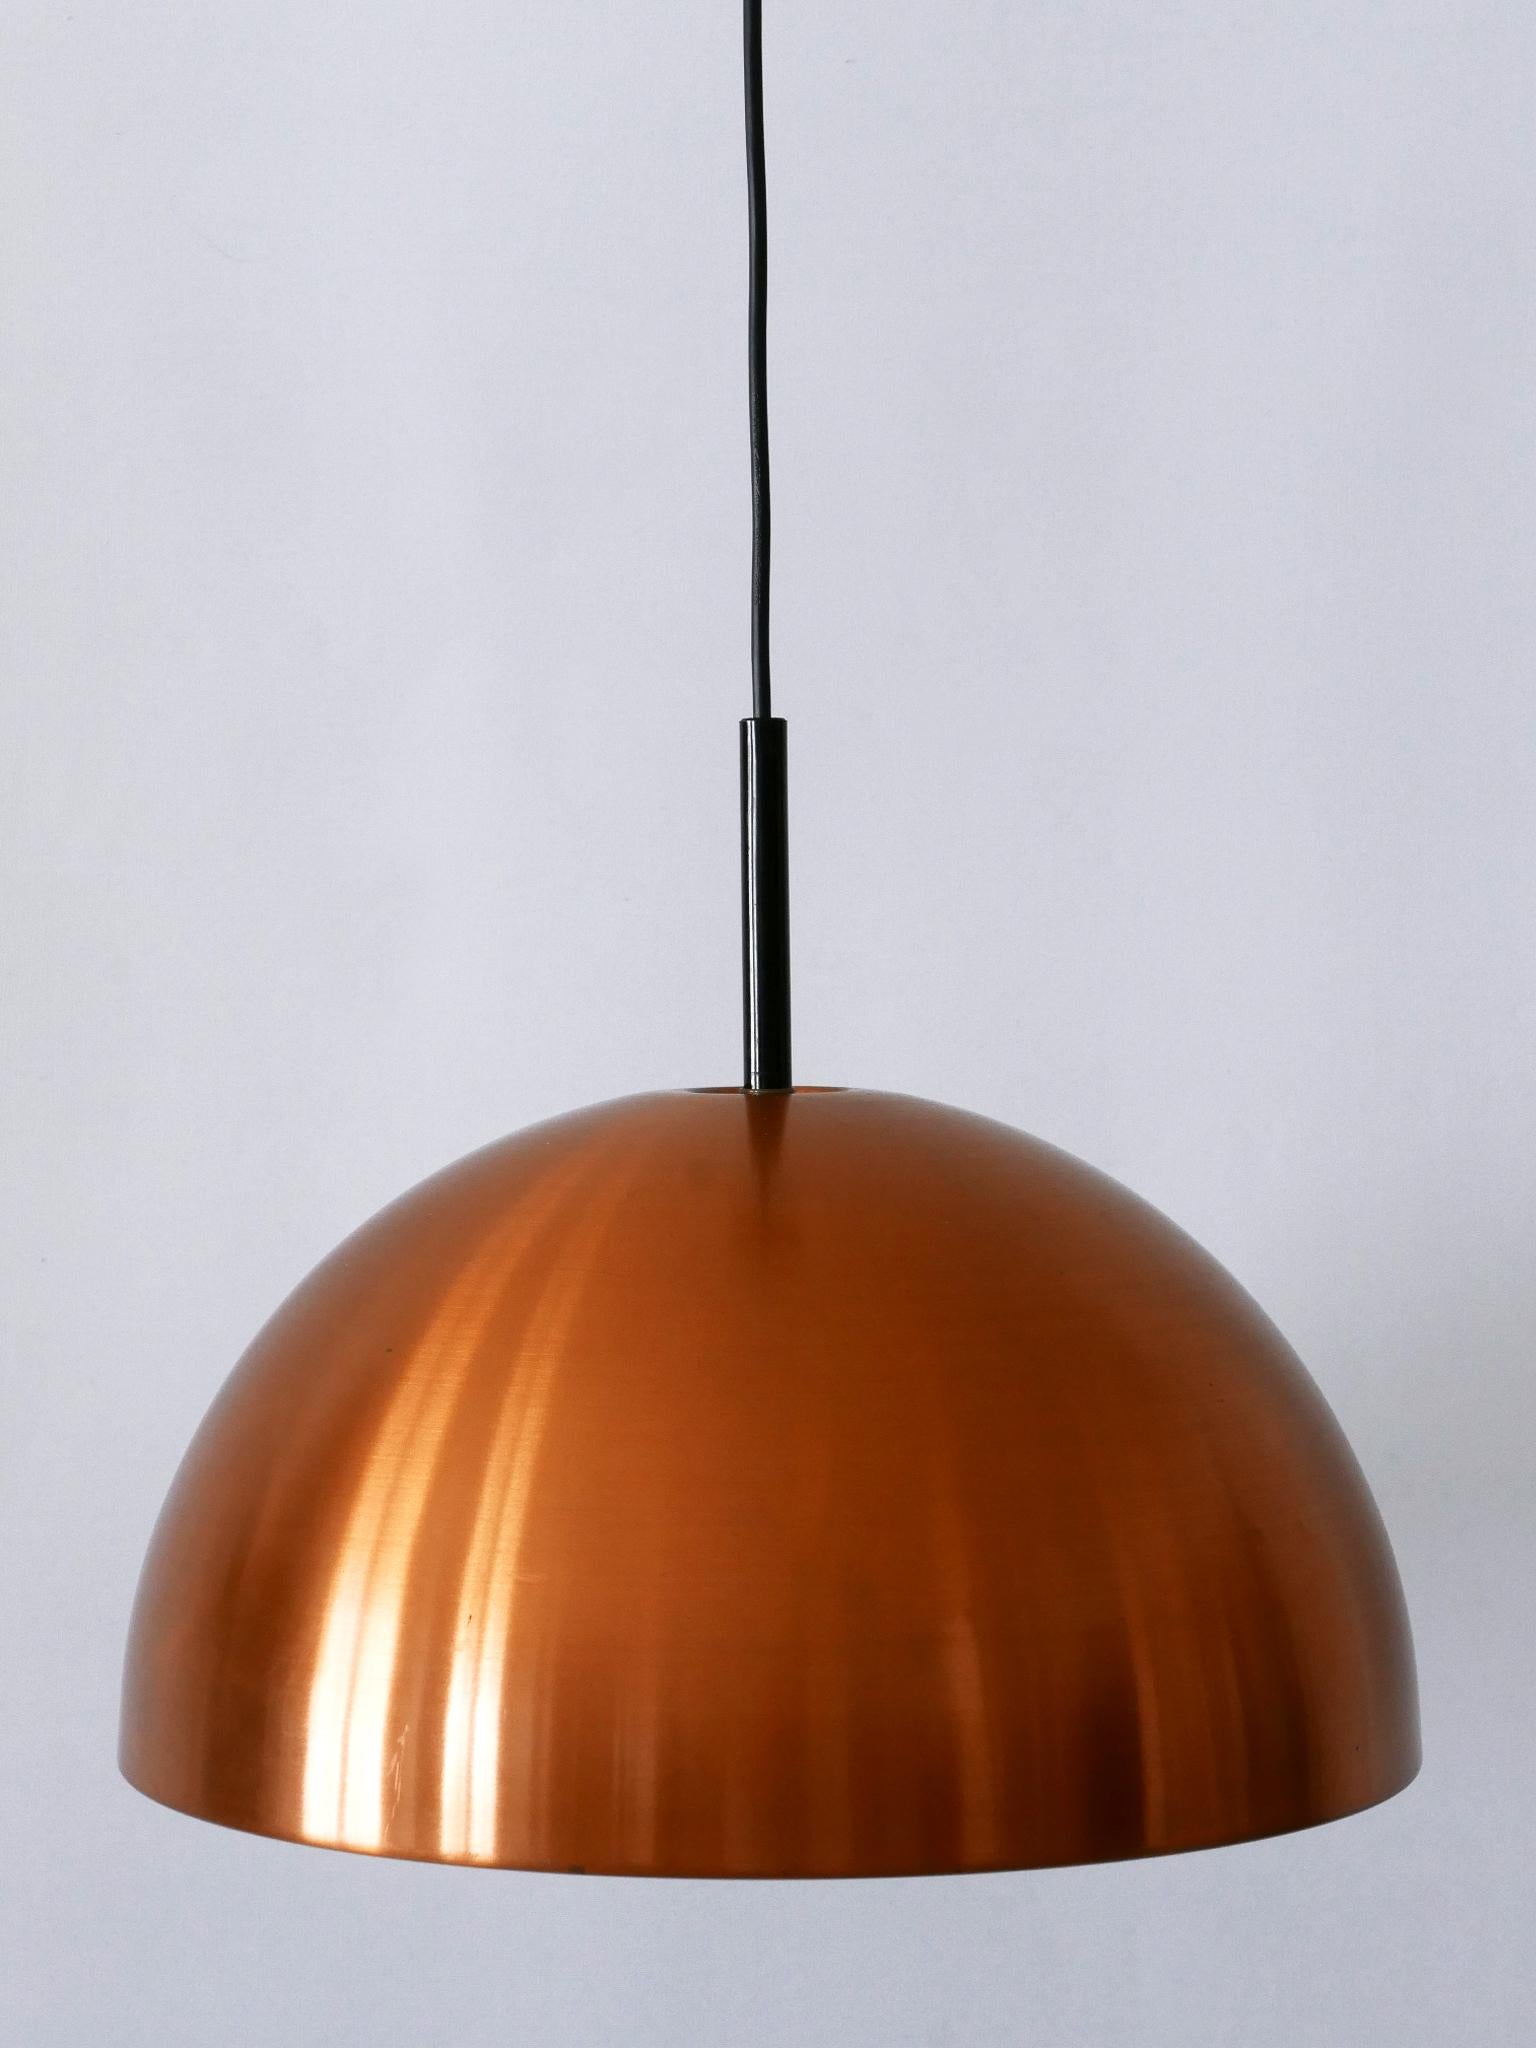 Elegant Mid-Century Modern Copper Pendant Lamp by Staff & Schwarz Germany 1960s For Sale 11